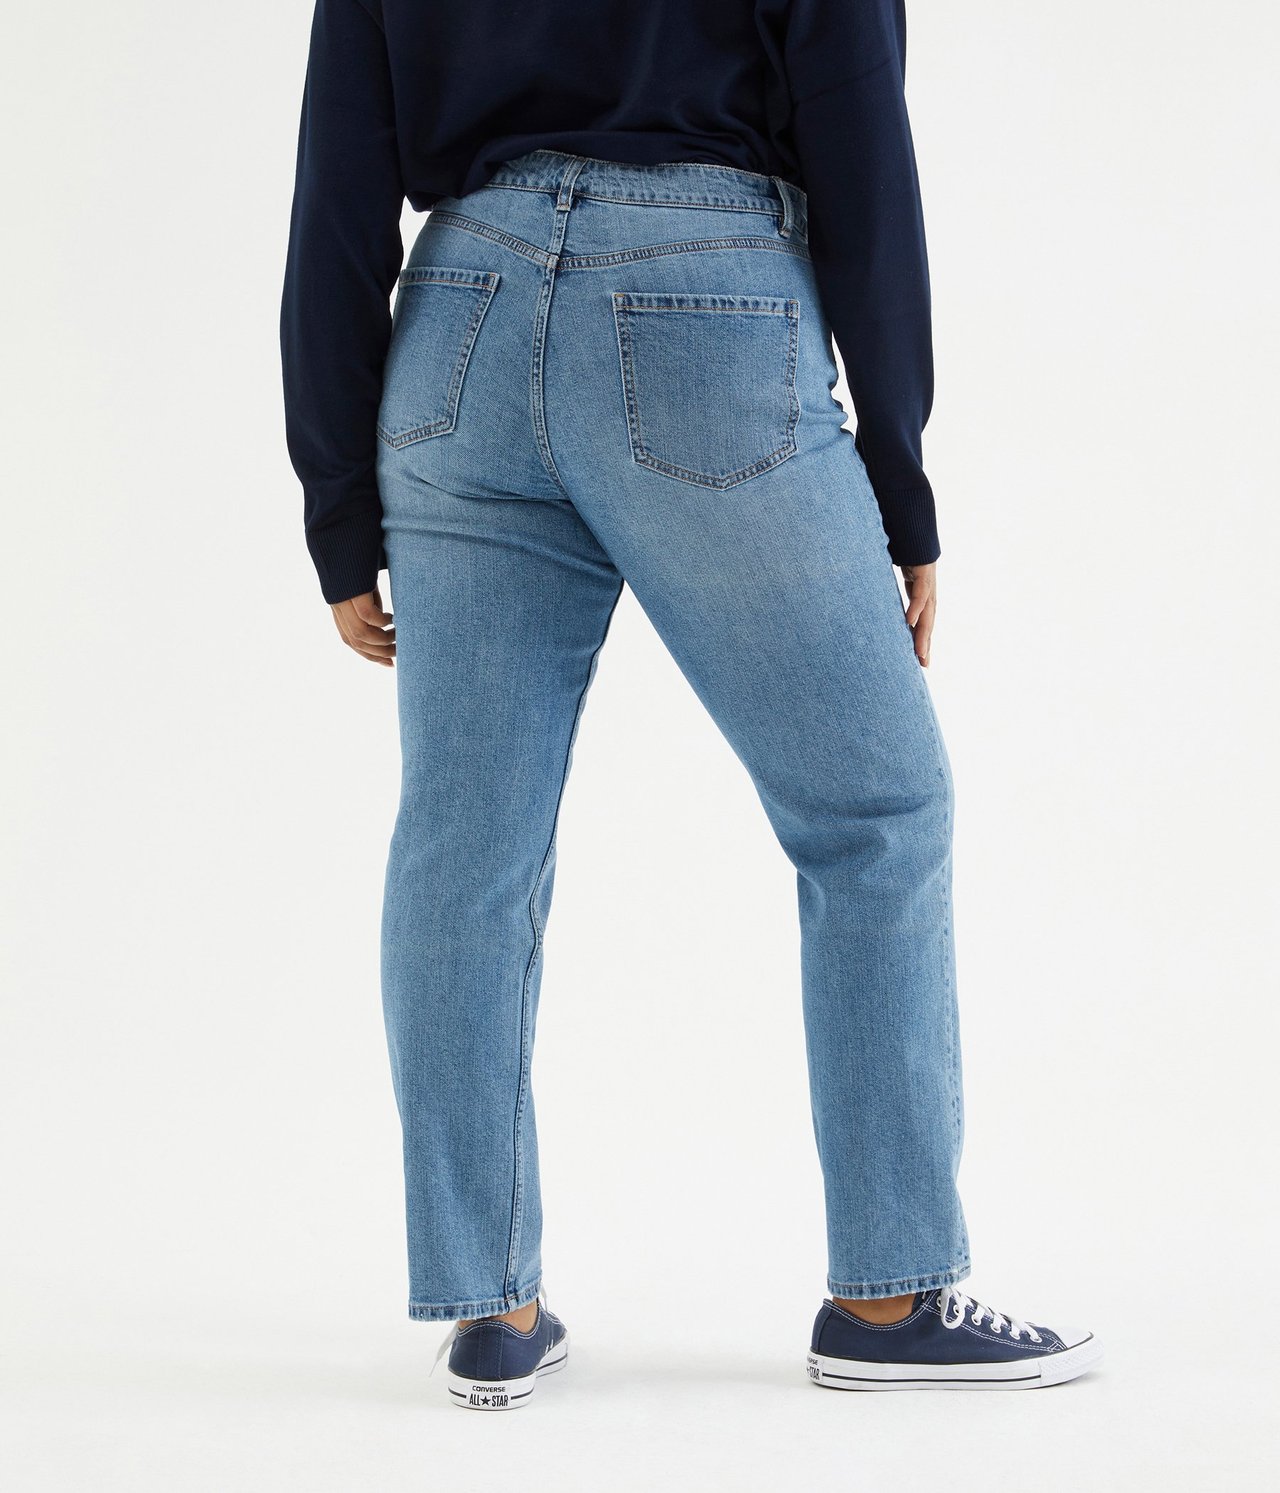 Jeans high waist tapered Lys denim - 34 - 7